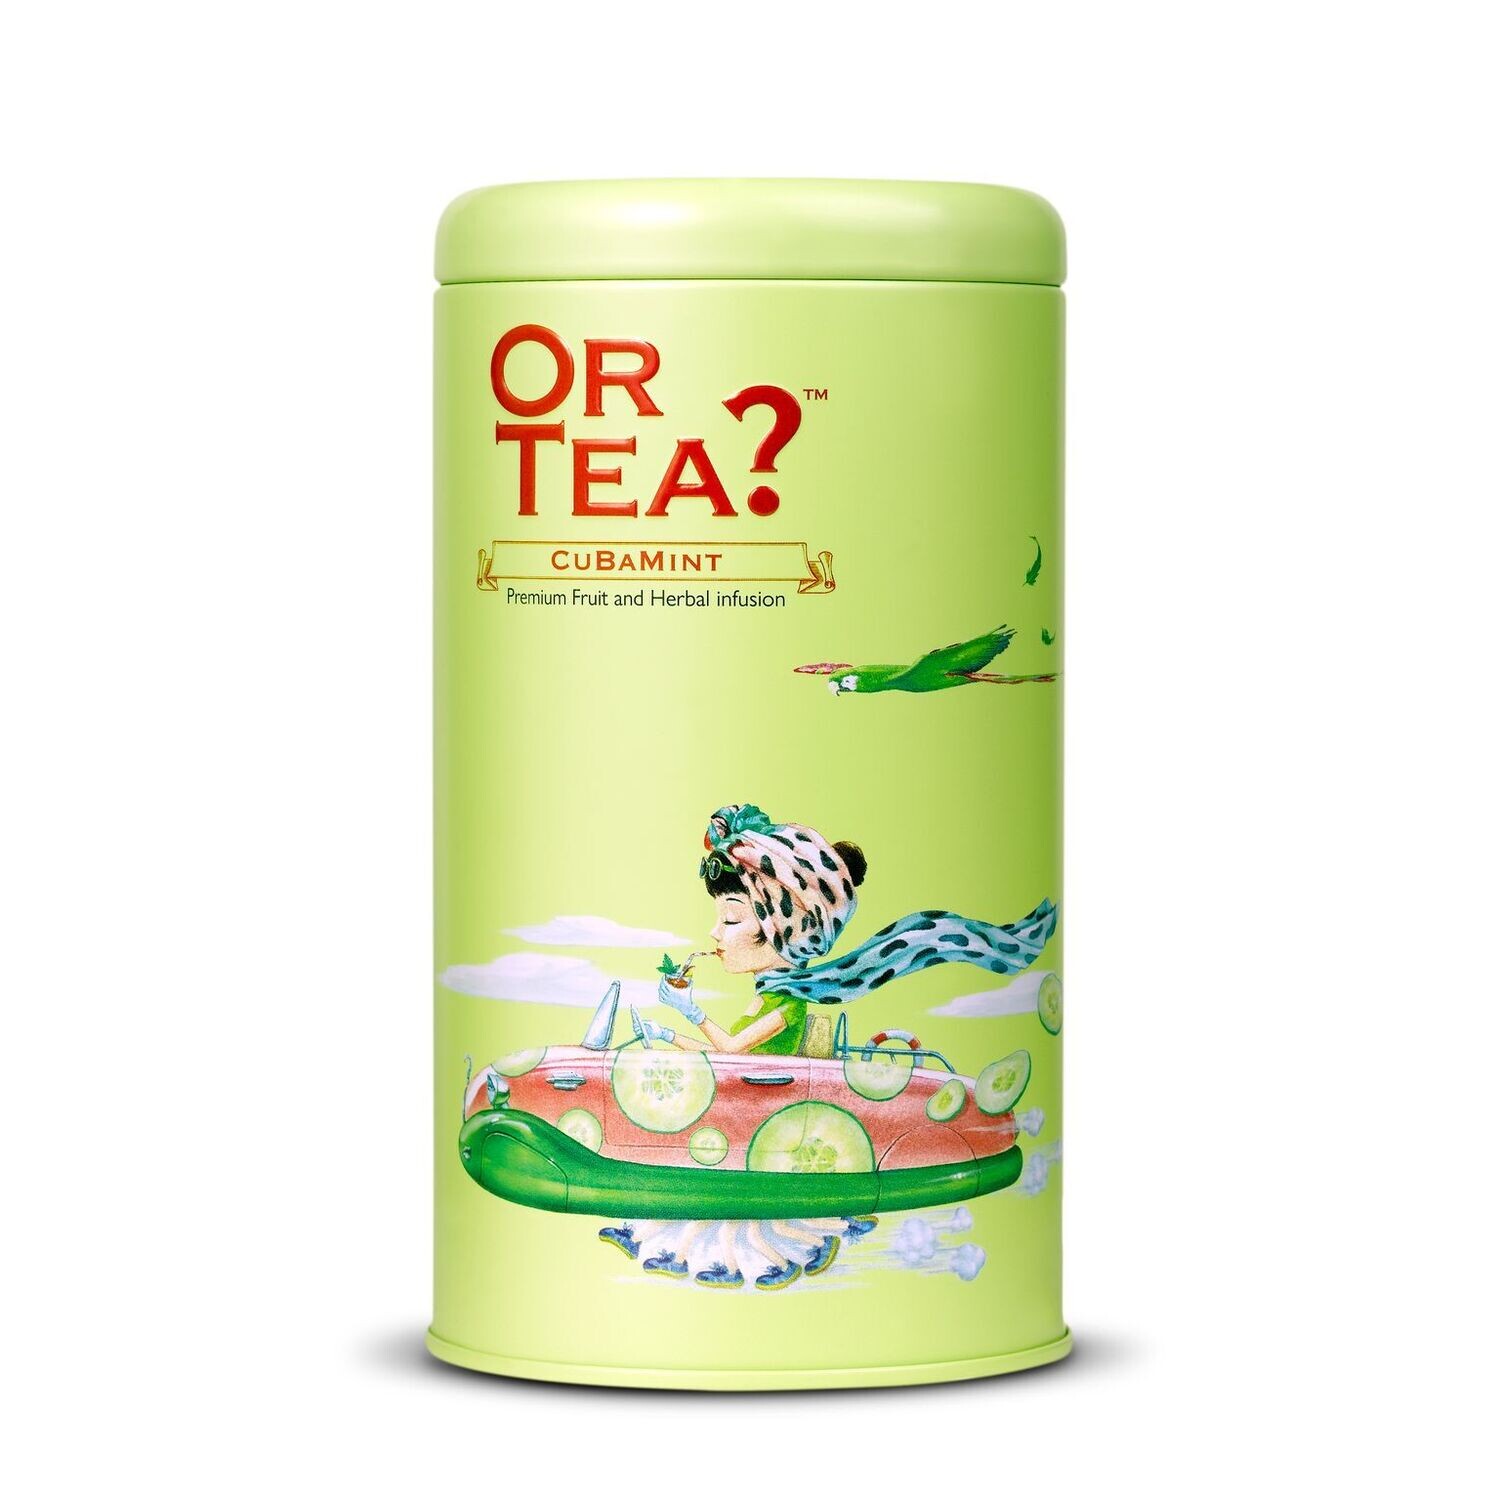 OR TEA? CUBA MINT - CANISTER